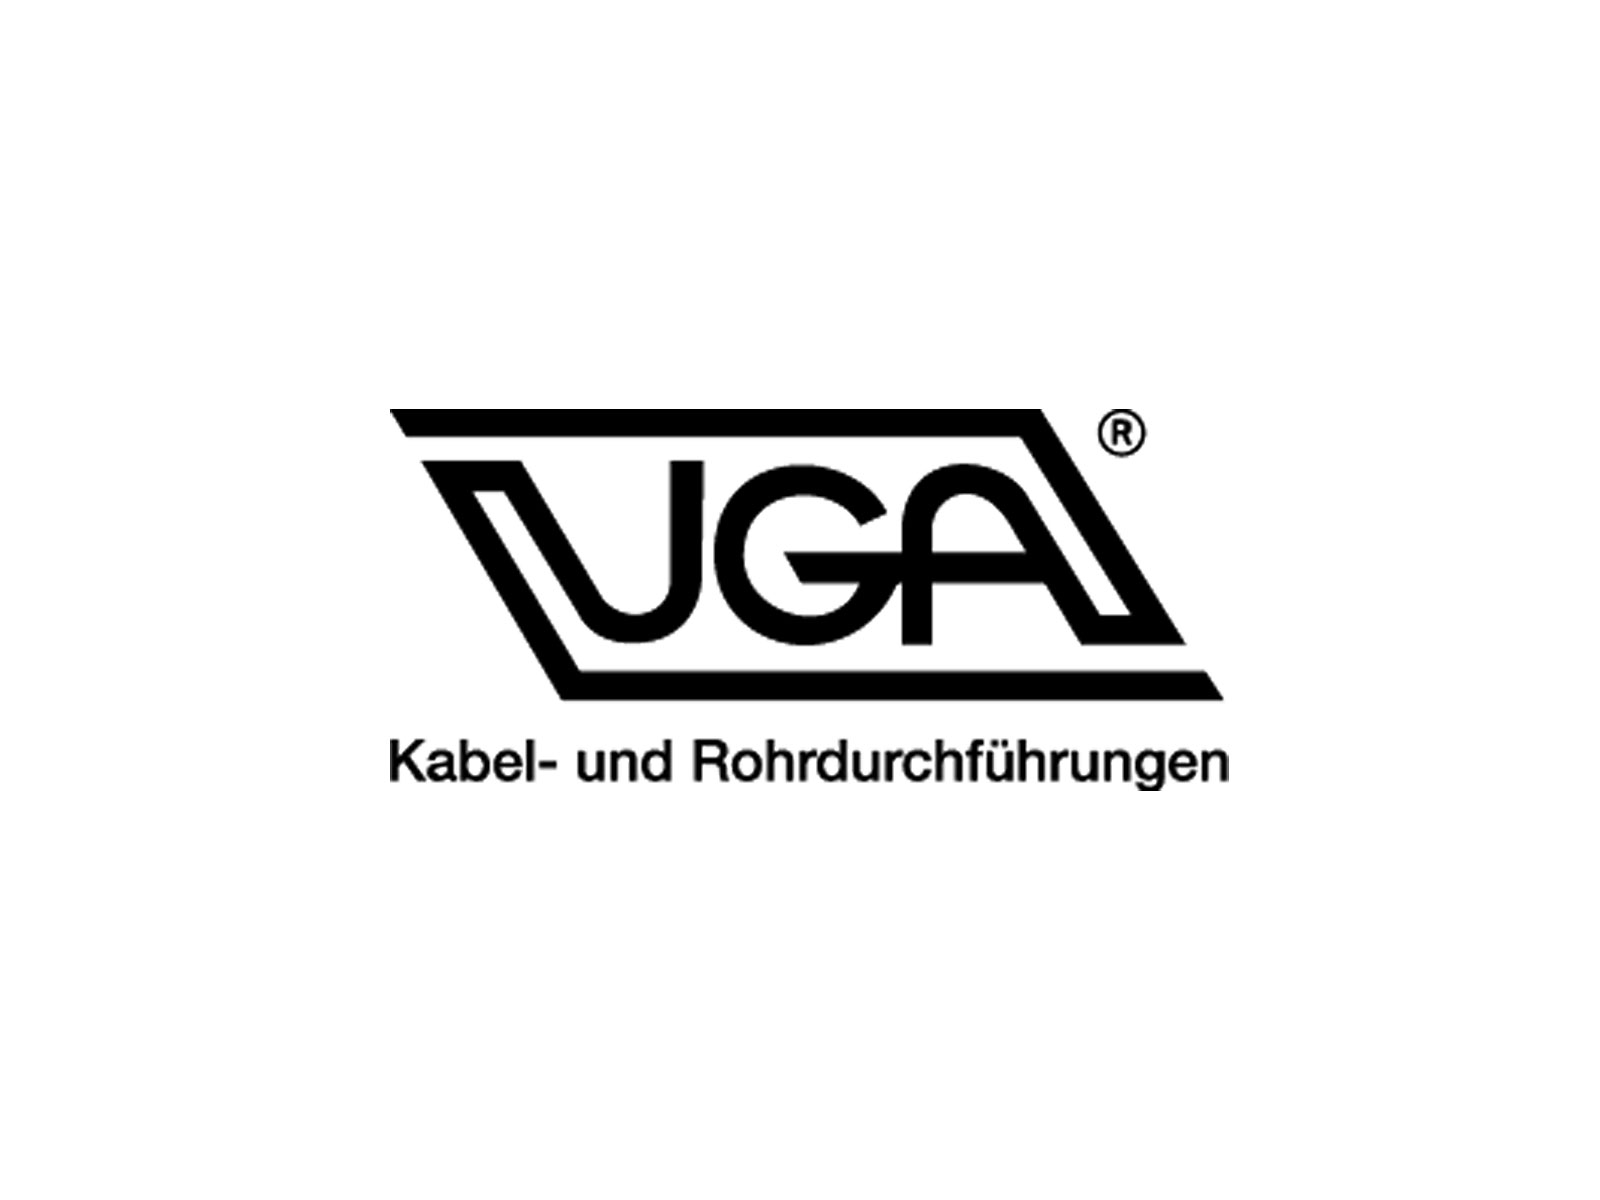 UGA SYSTEM-TECHNIK GmbH & Co. KG